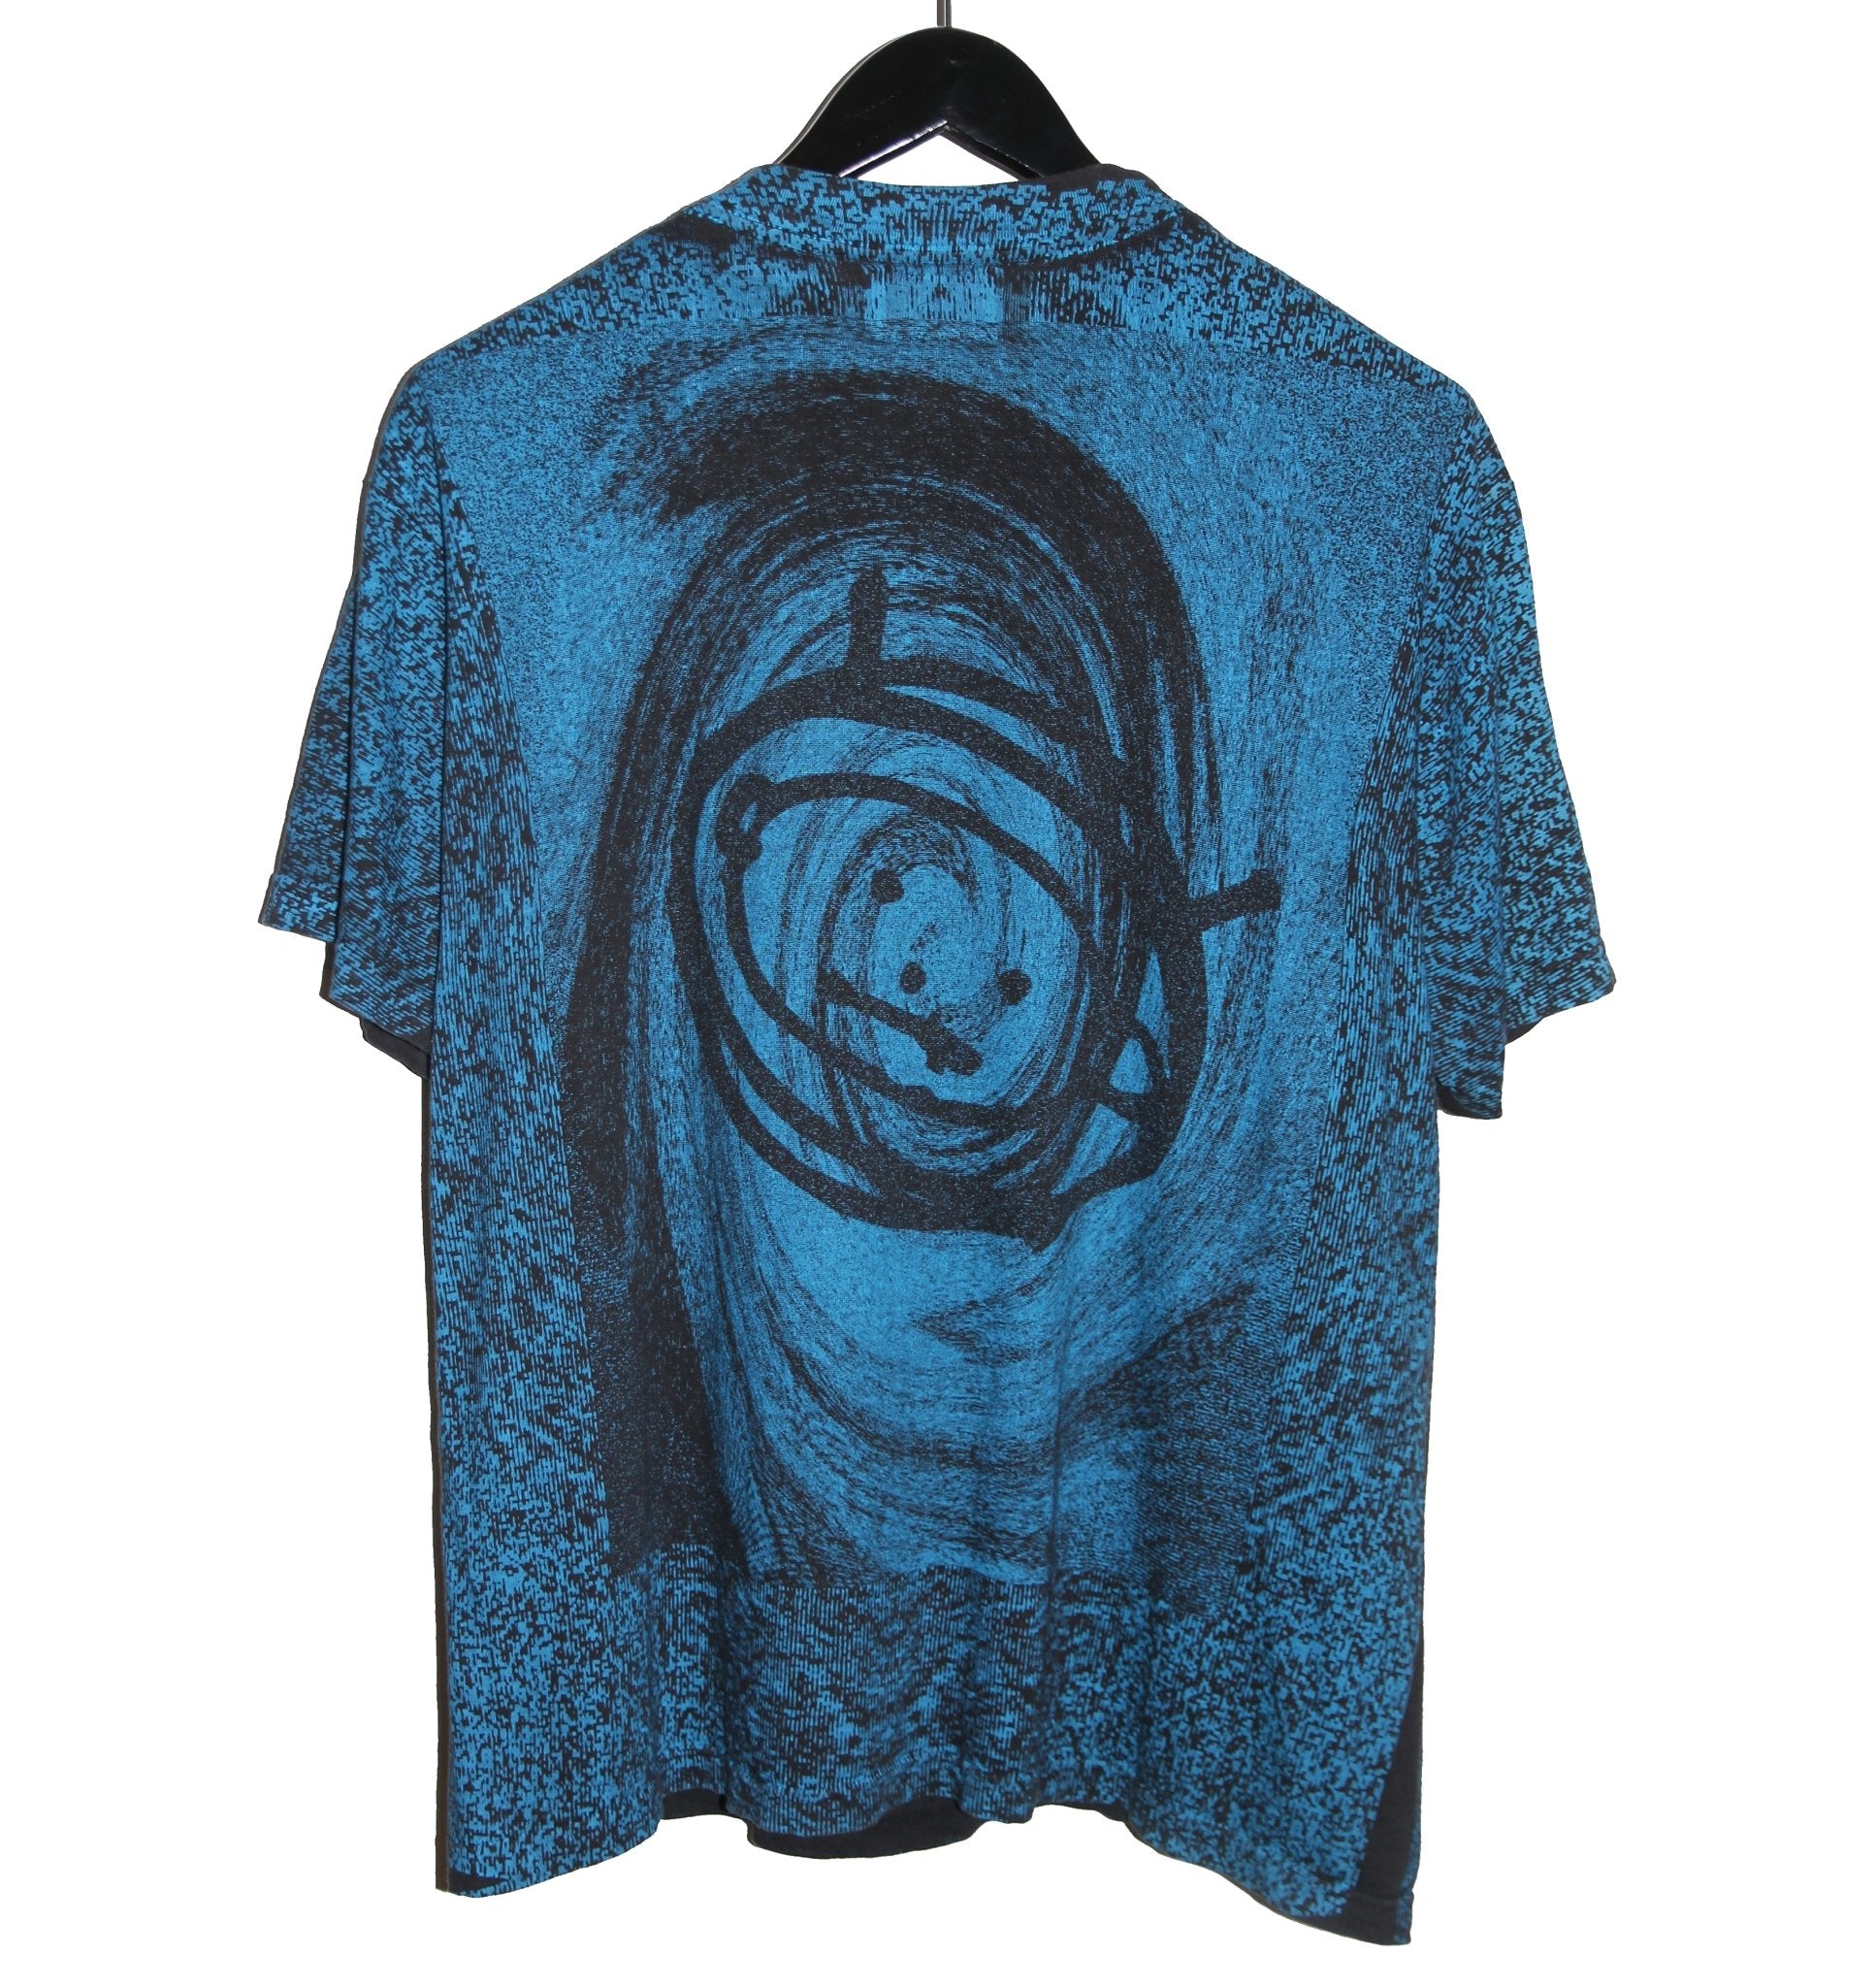 U2 1993 Zooropa All Over Print Shirt - Faded AU